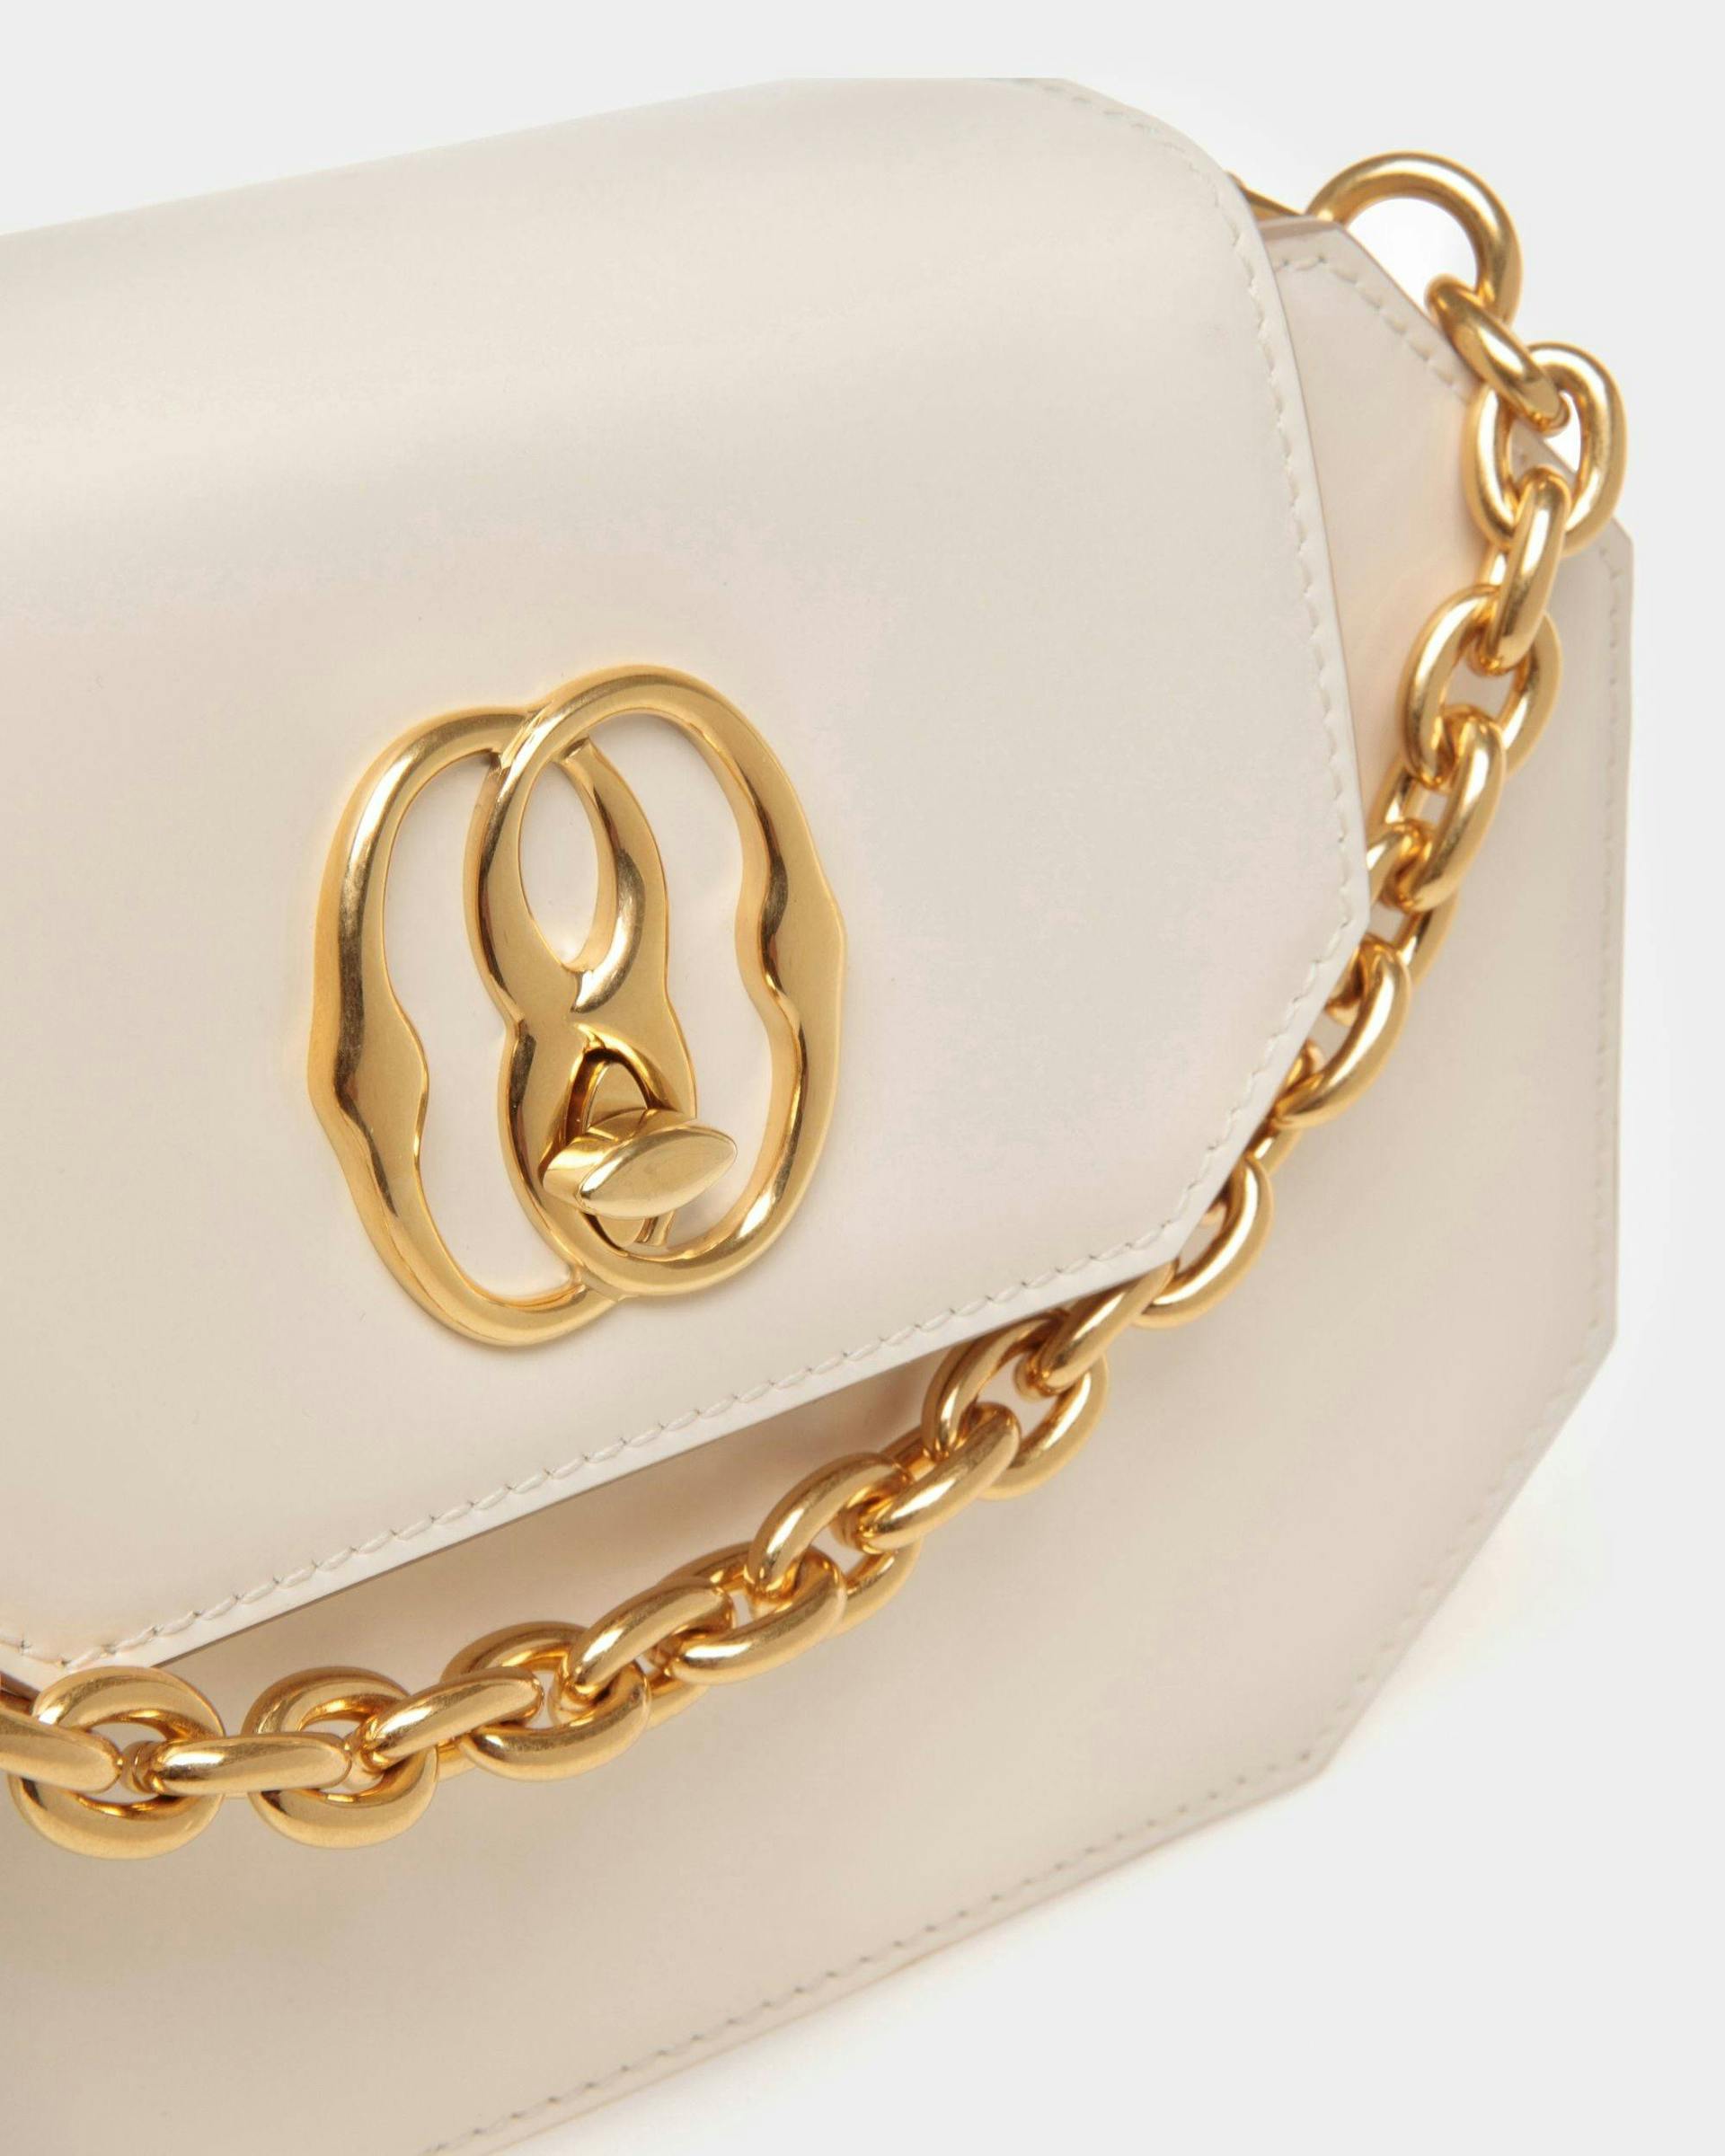 Women's Emblem Mini Bag in White Patent Leather | Bally | Still Life Detail